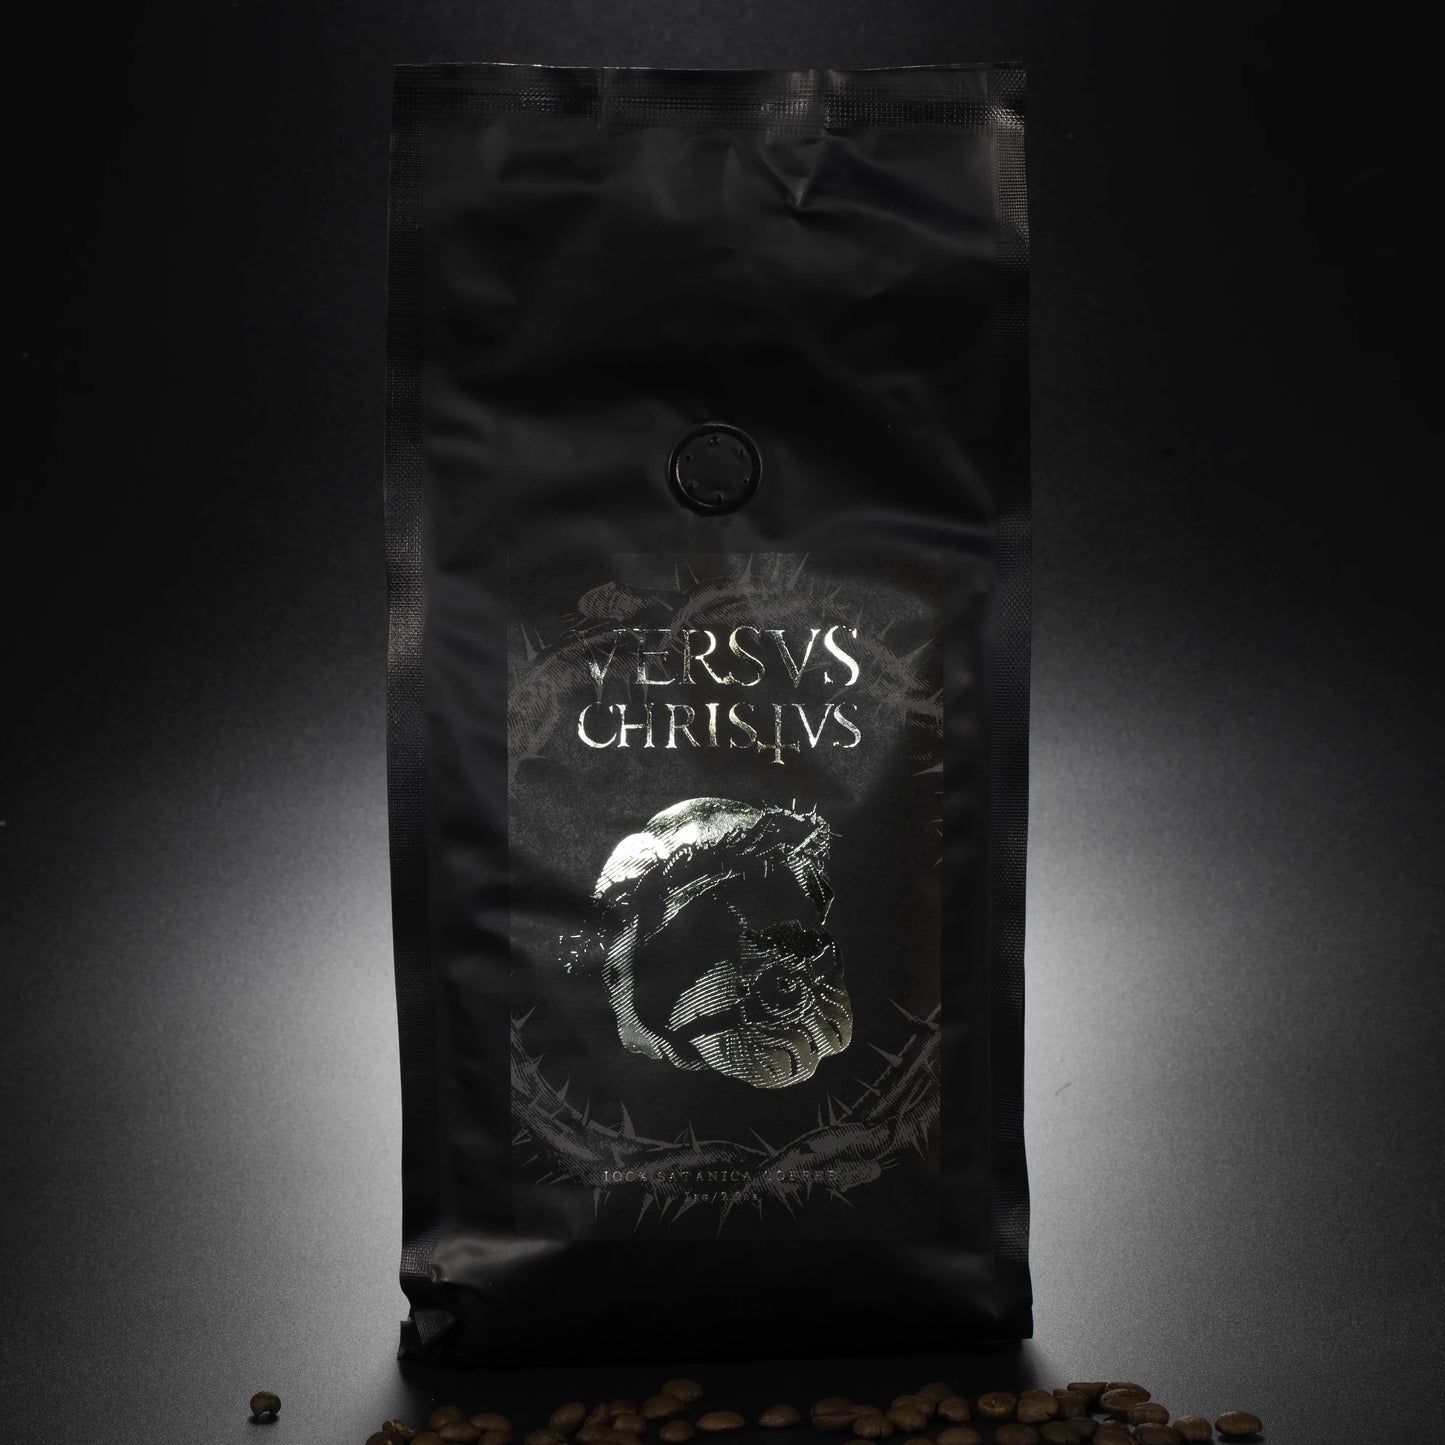 Behemoth 'Versvs Christvs' whole beans coffee